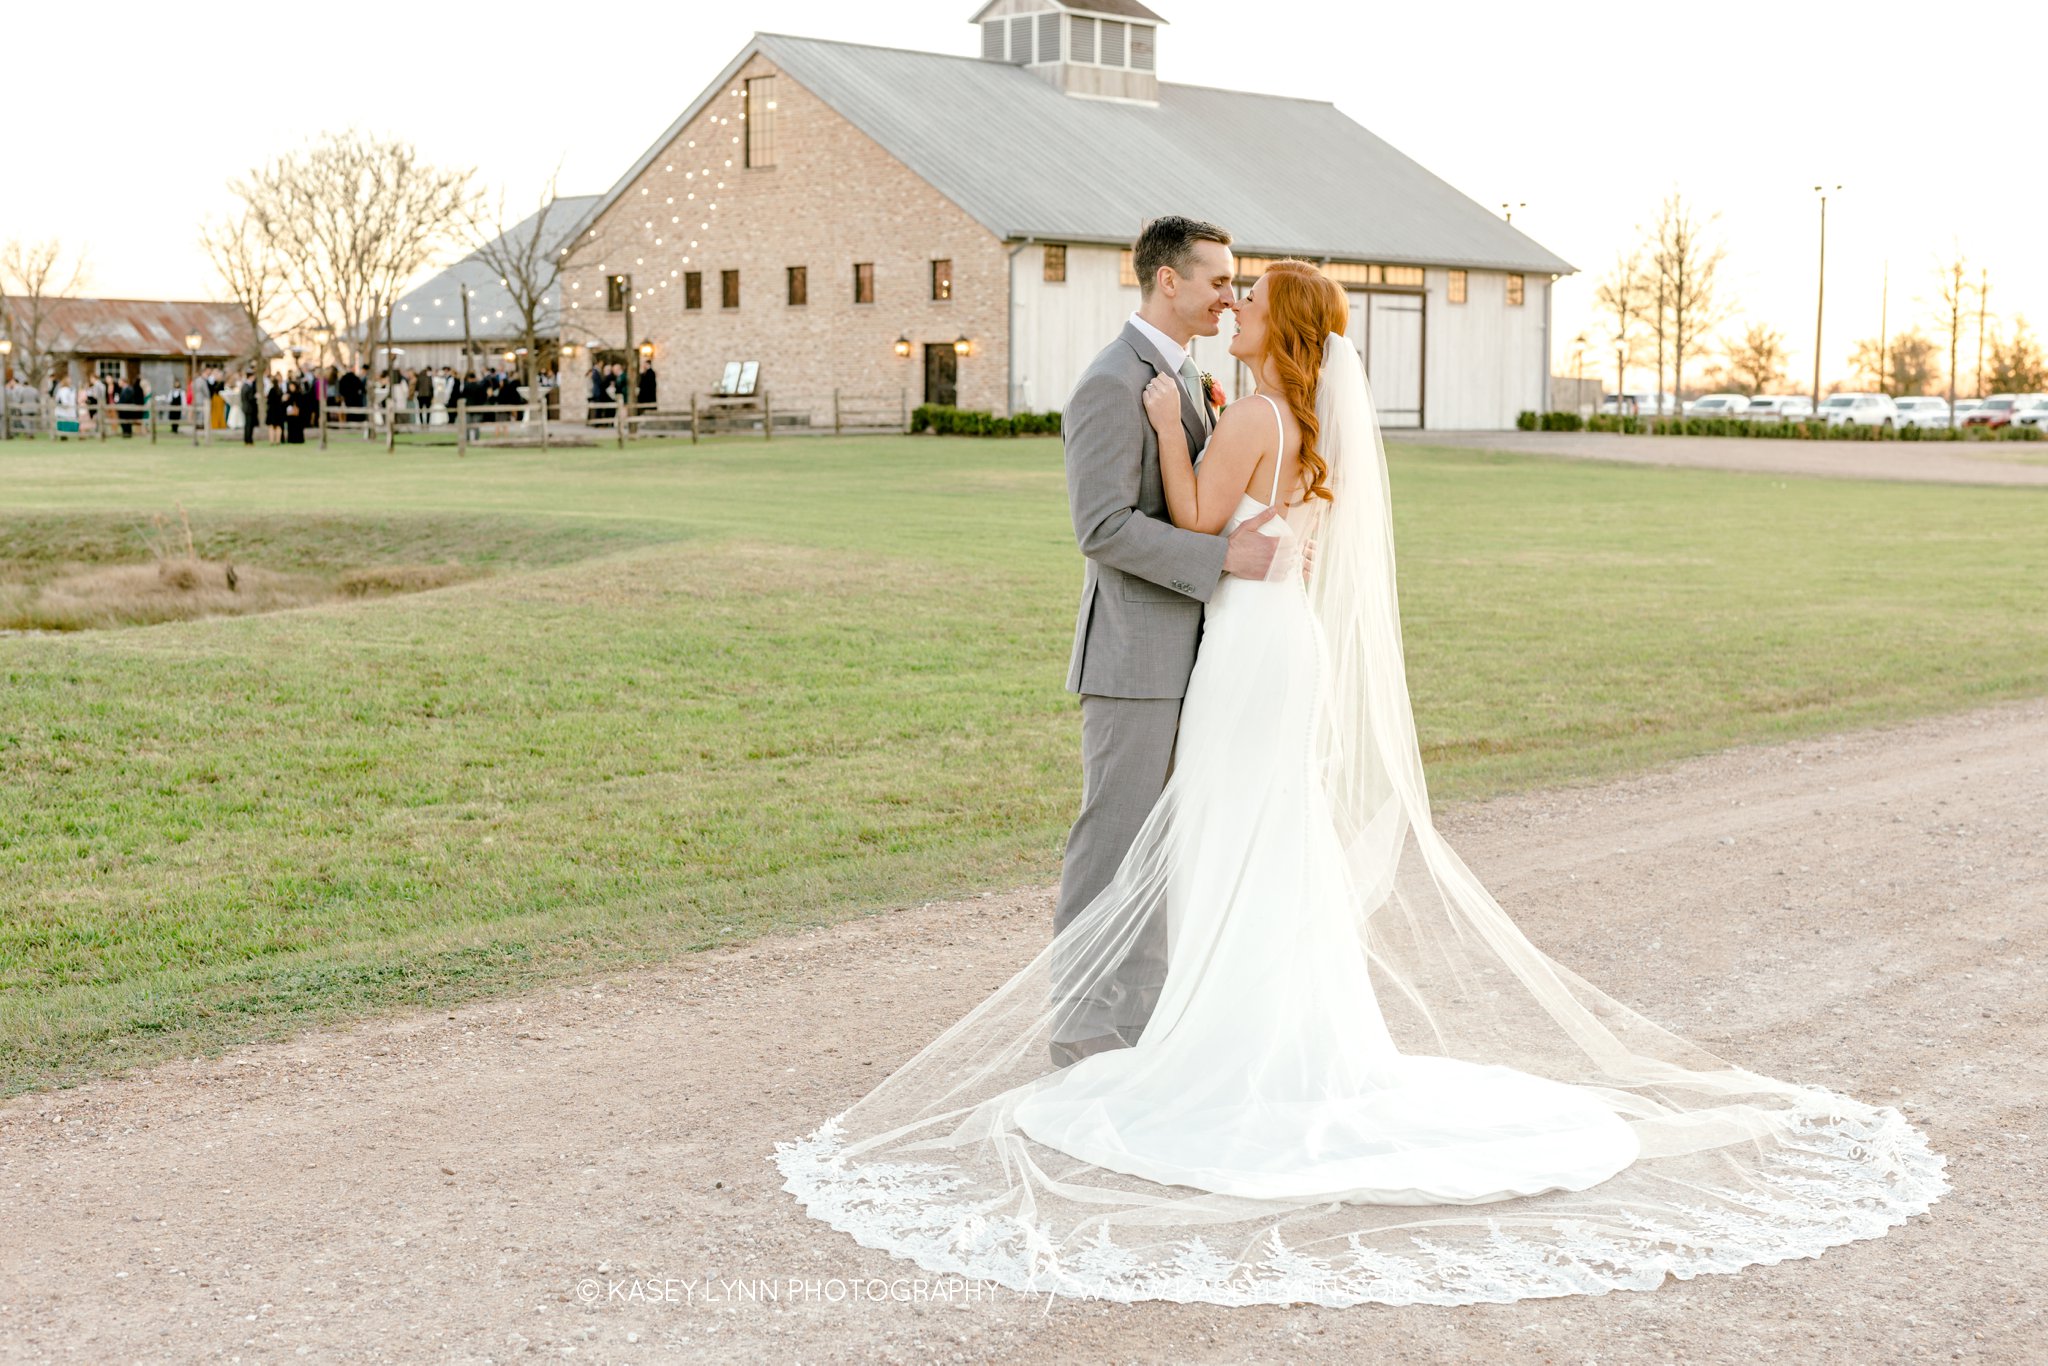 Beckendorff Farms Wedding Photographer / Kasey Lynn Photography